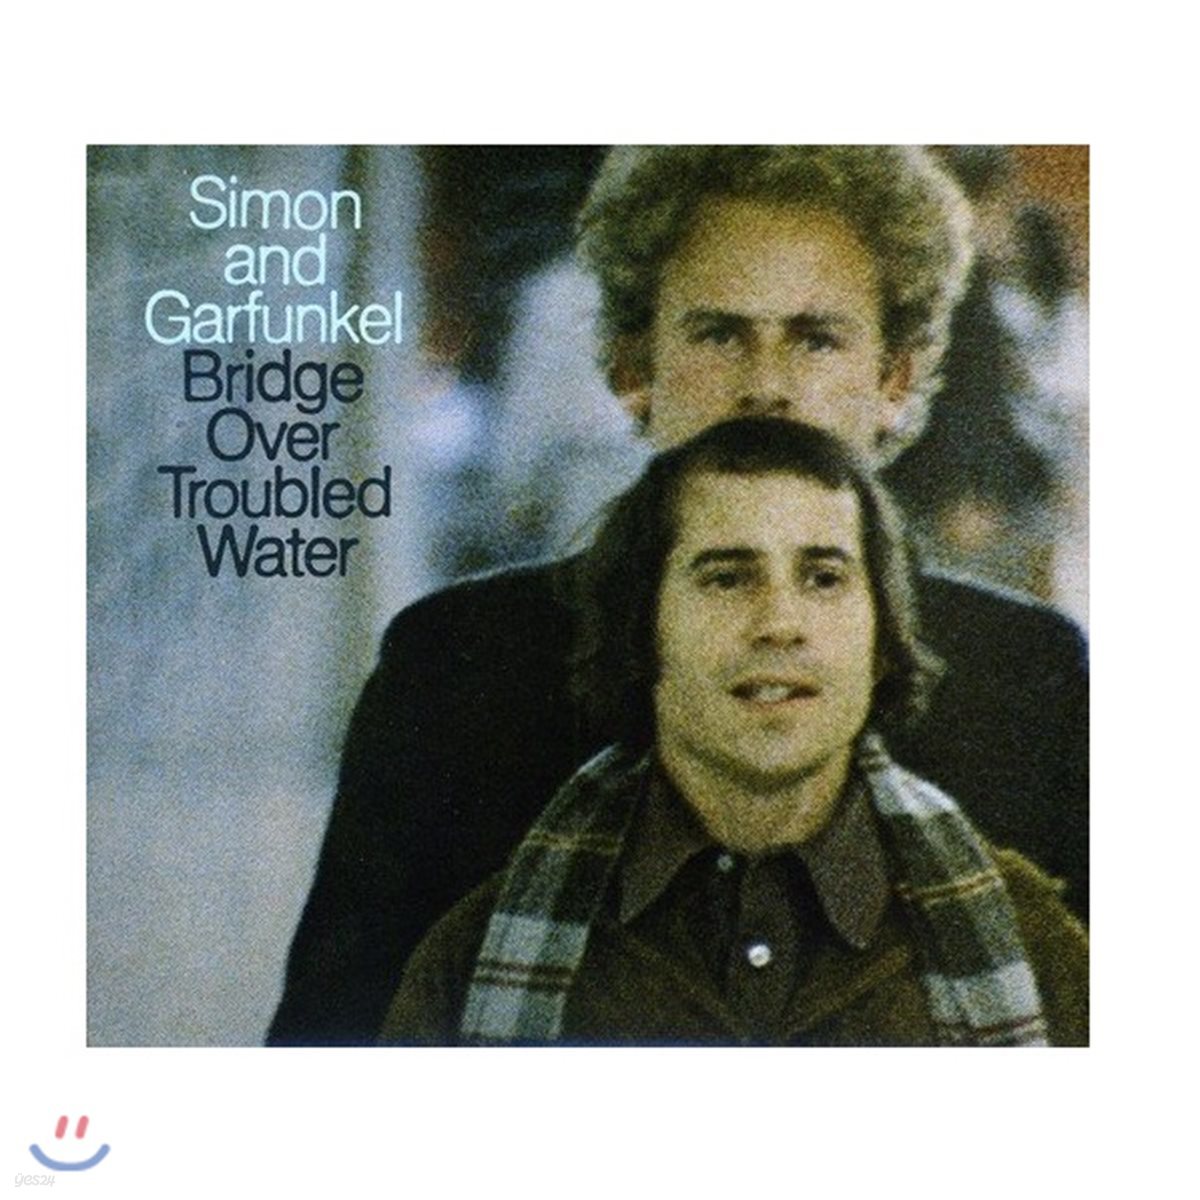 Simon &amp; Garfunkel (사이먼 앤 가펑클) - Bridge Over Troubled Water [발매 40주년 기념앨범]